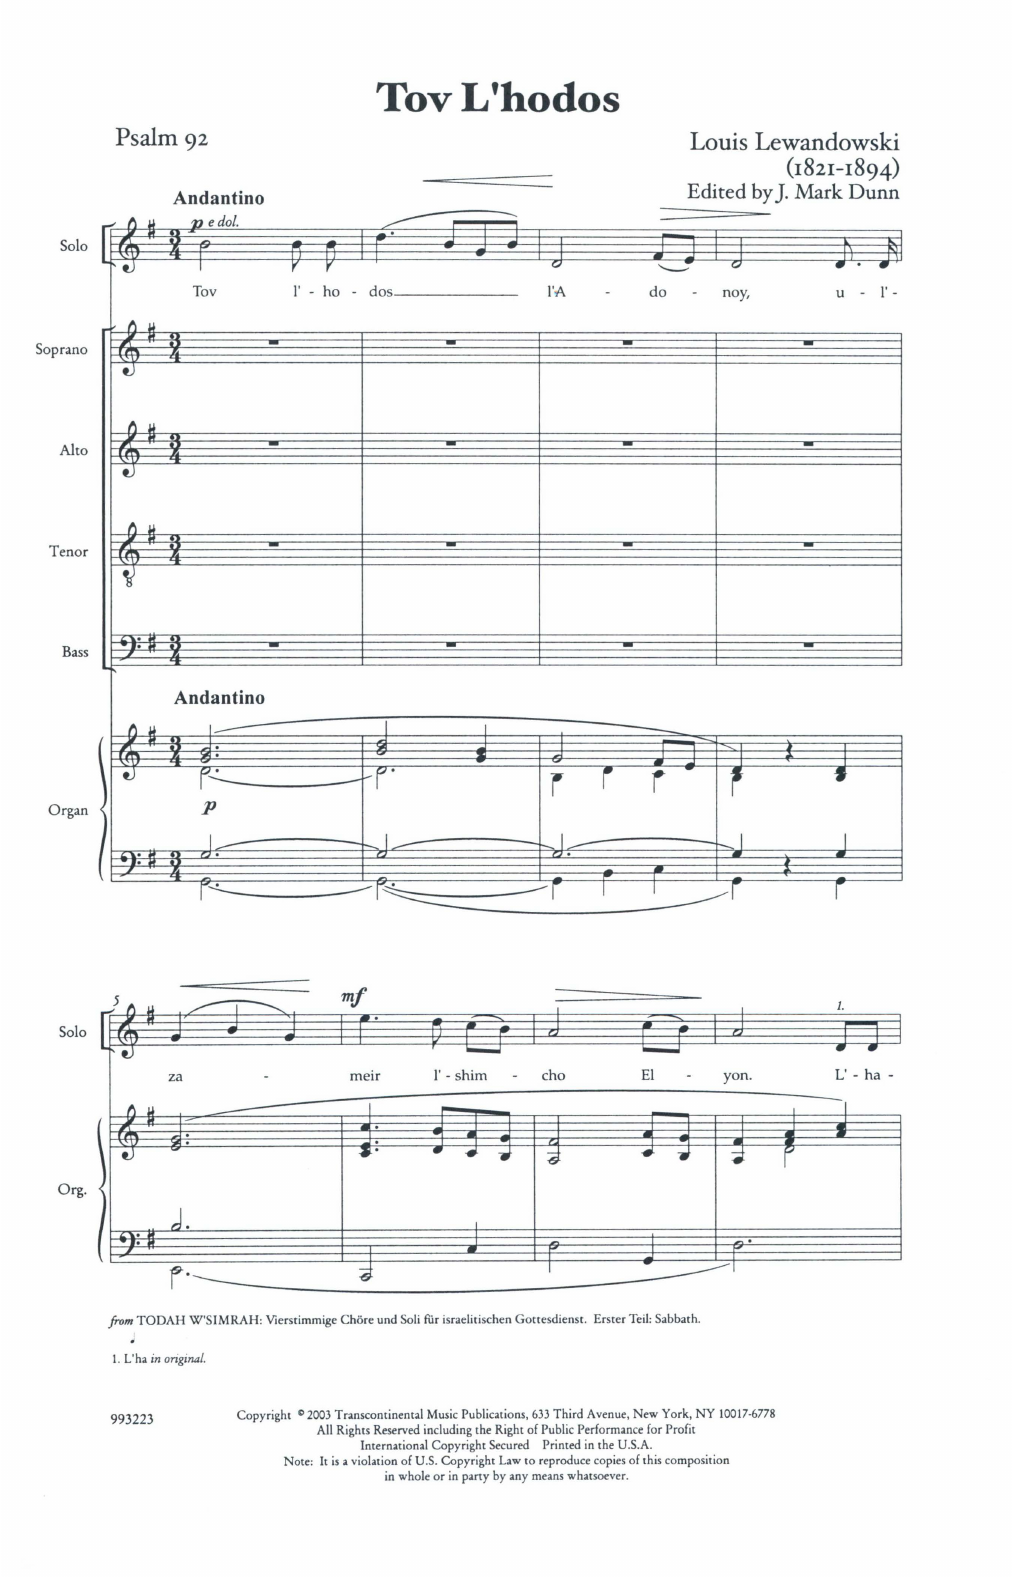 Louis Lewandowski Tov L'hdot (it Is Good To Give Thanks) Sheet Music Notes & Chords for SATB Choir - Download or Print PDF